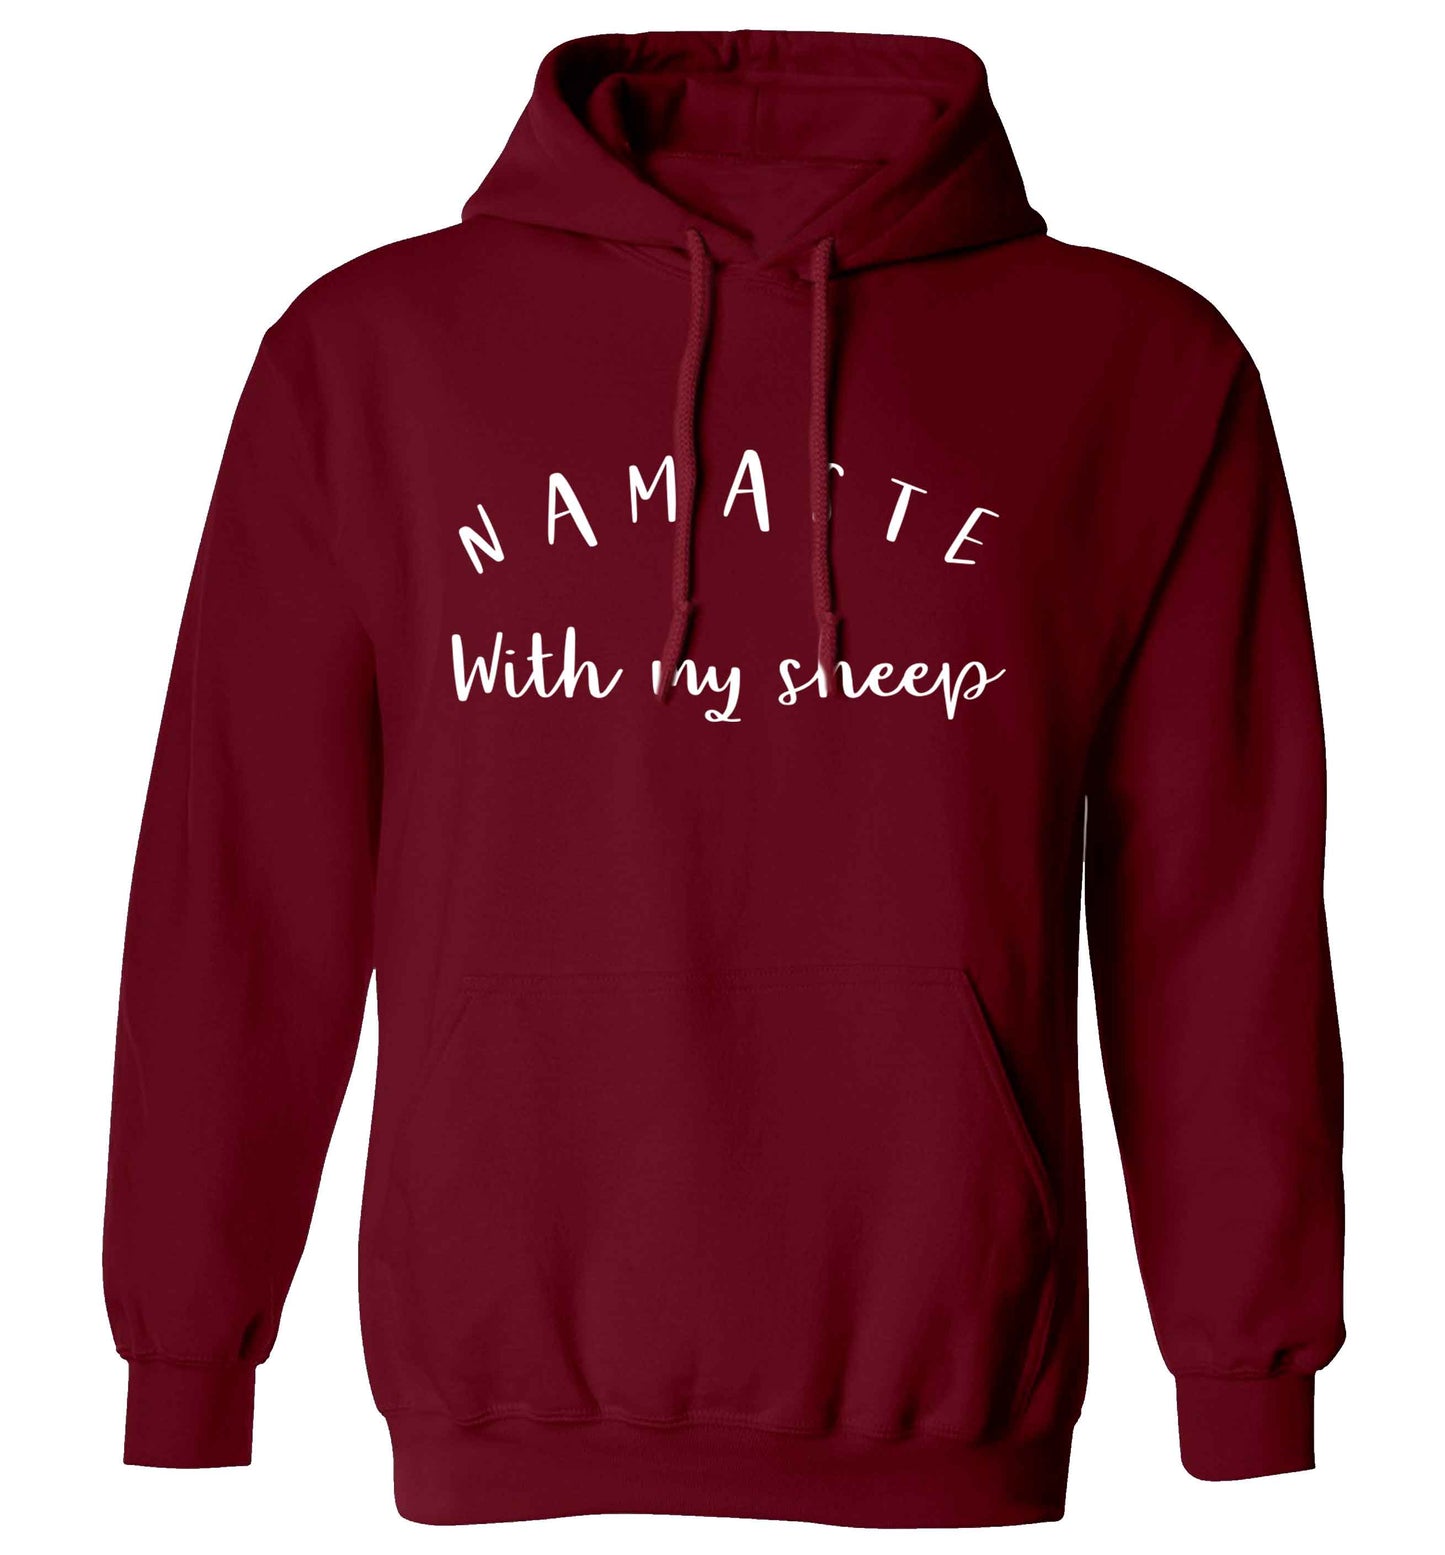 Namaste with my sheep adults unisex maroon hoodie 2XL